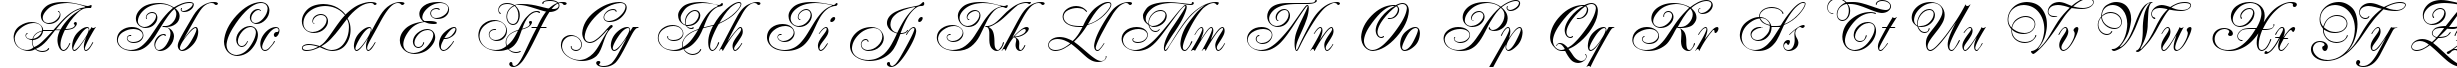 Пример написания английского алфавита шрифтом Majestic